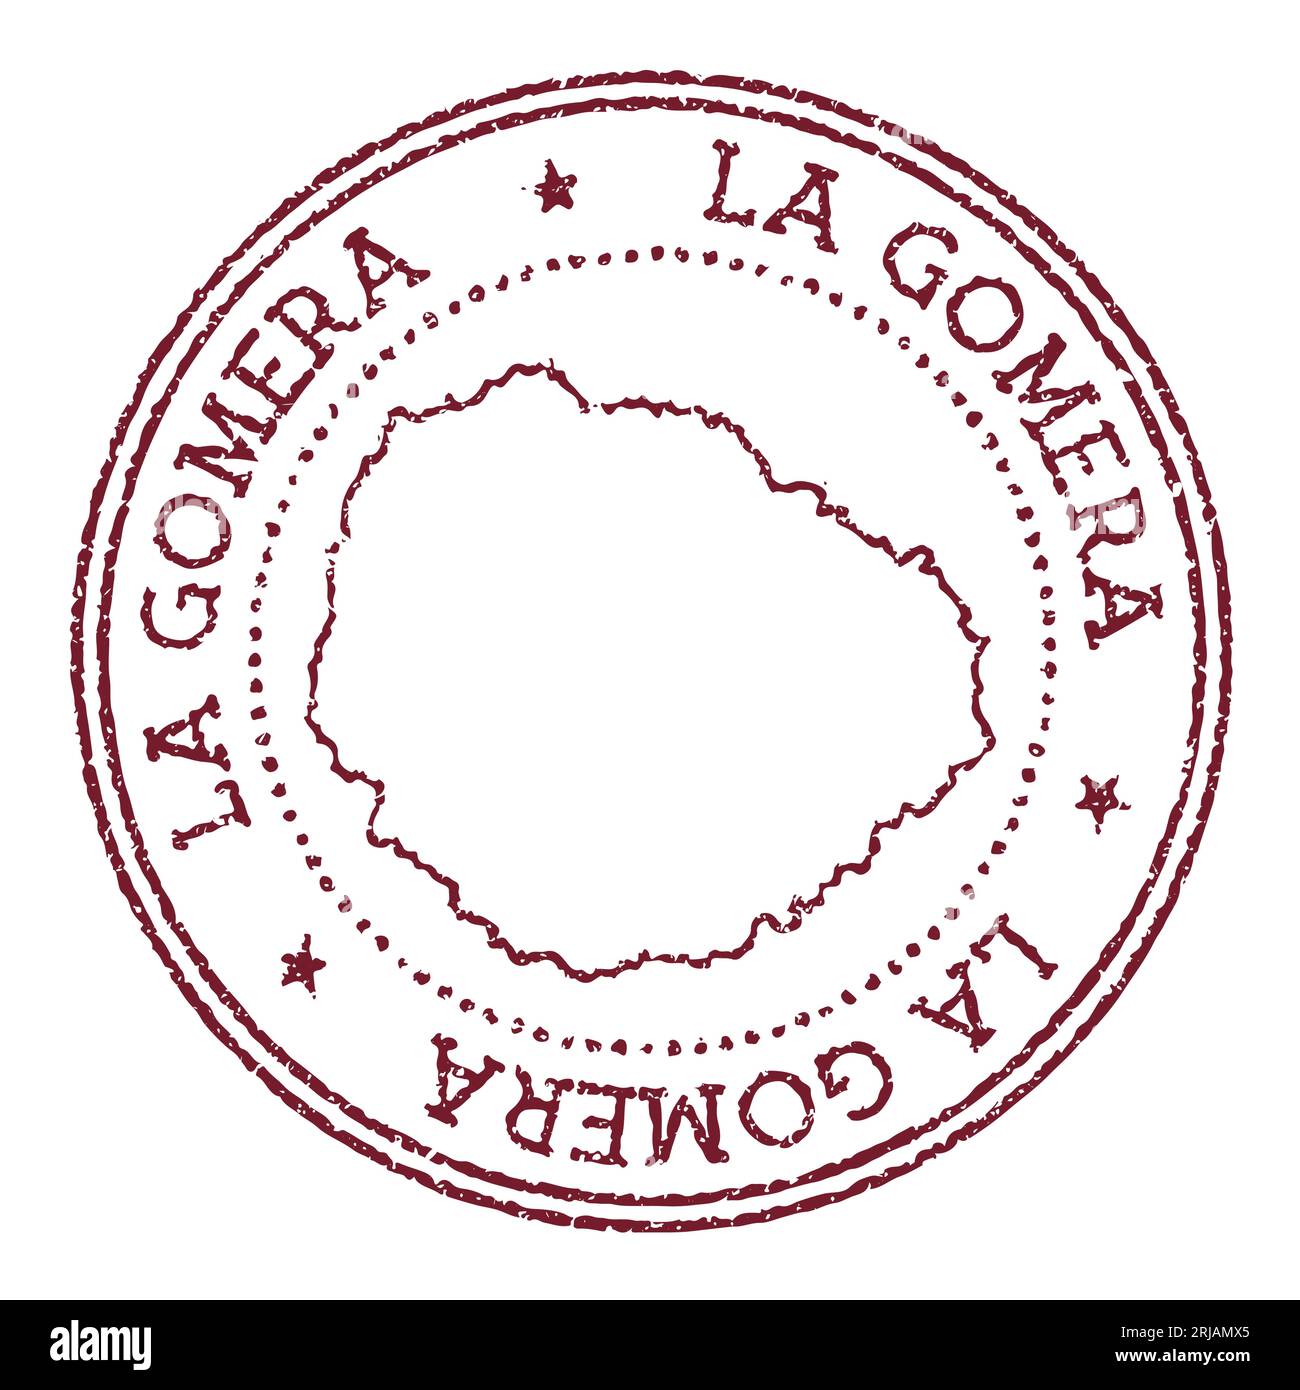 La Gomera Runde Gummimarke mit Inselkarte. Vintage-roter Passstempel mit kreisförmigem Text und Sternen, Vektorillustration. Stock Vektor